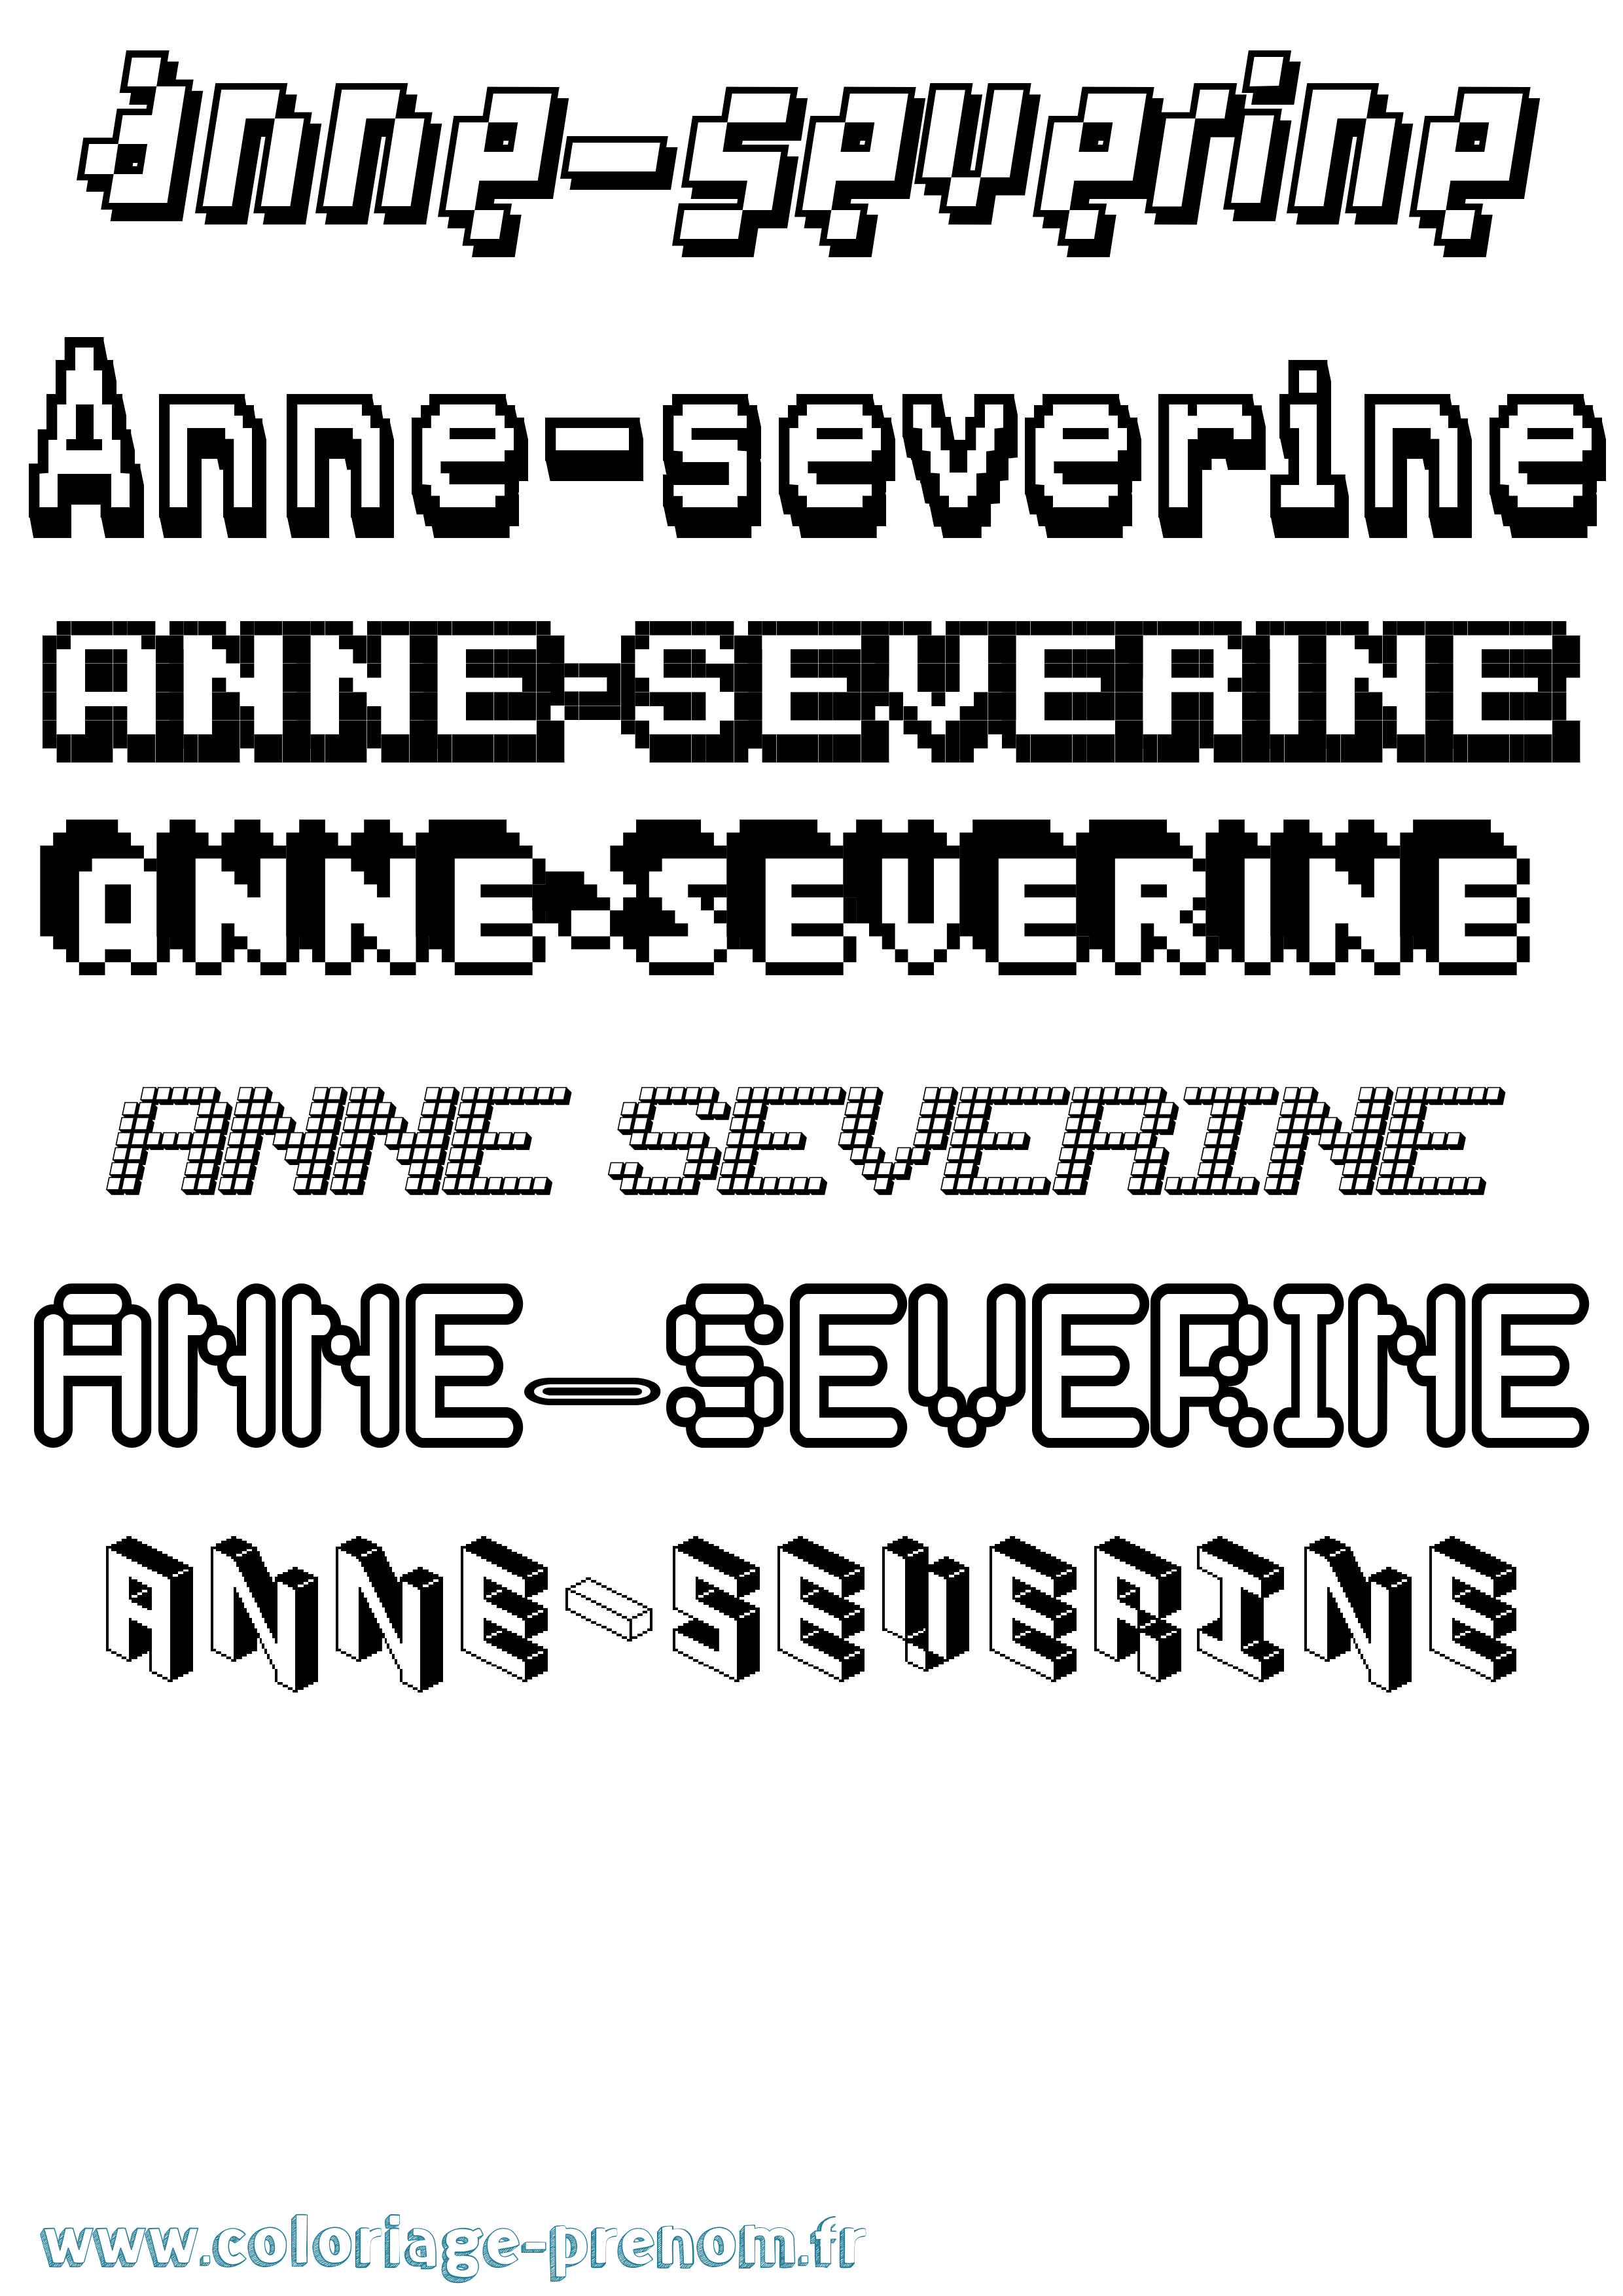 Coloriage prénom Anne-Severine Pixel